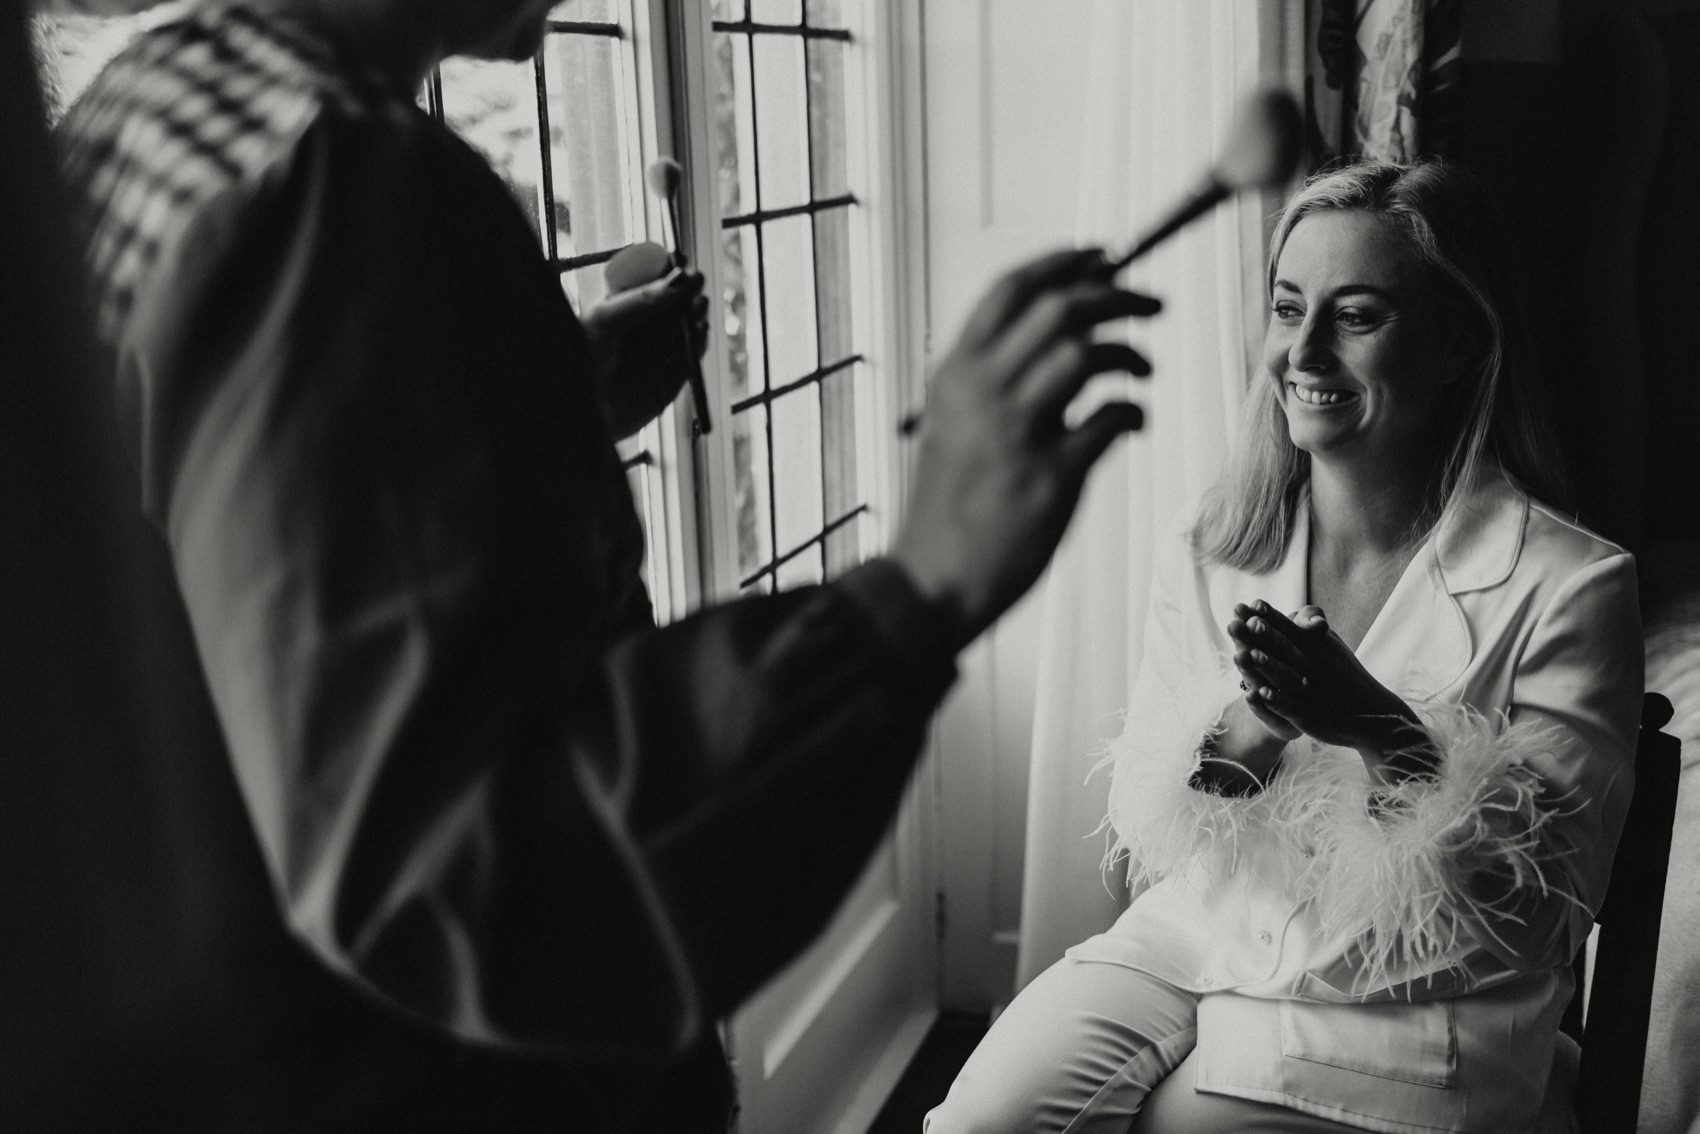 Creative and stylish documentary wedding photographer in Devon & Cornwall